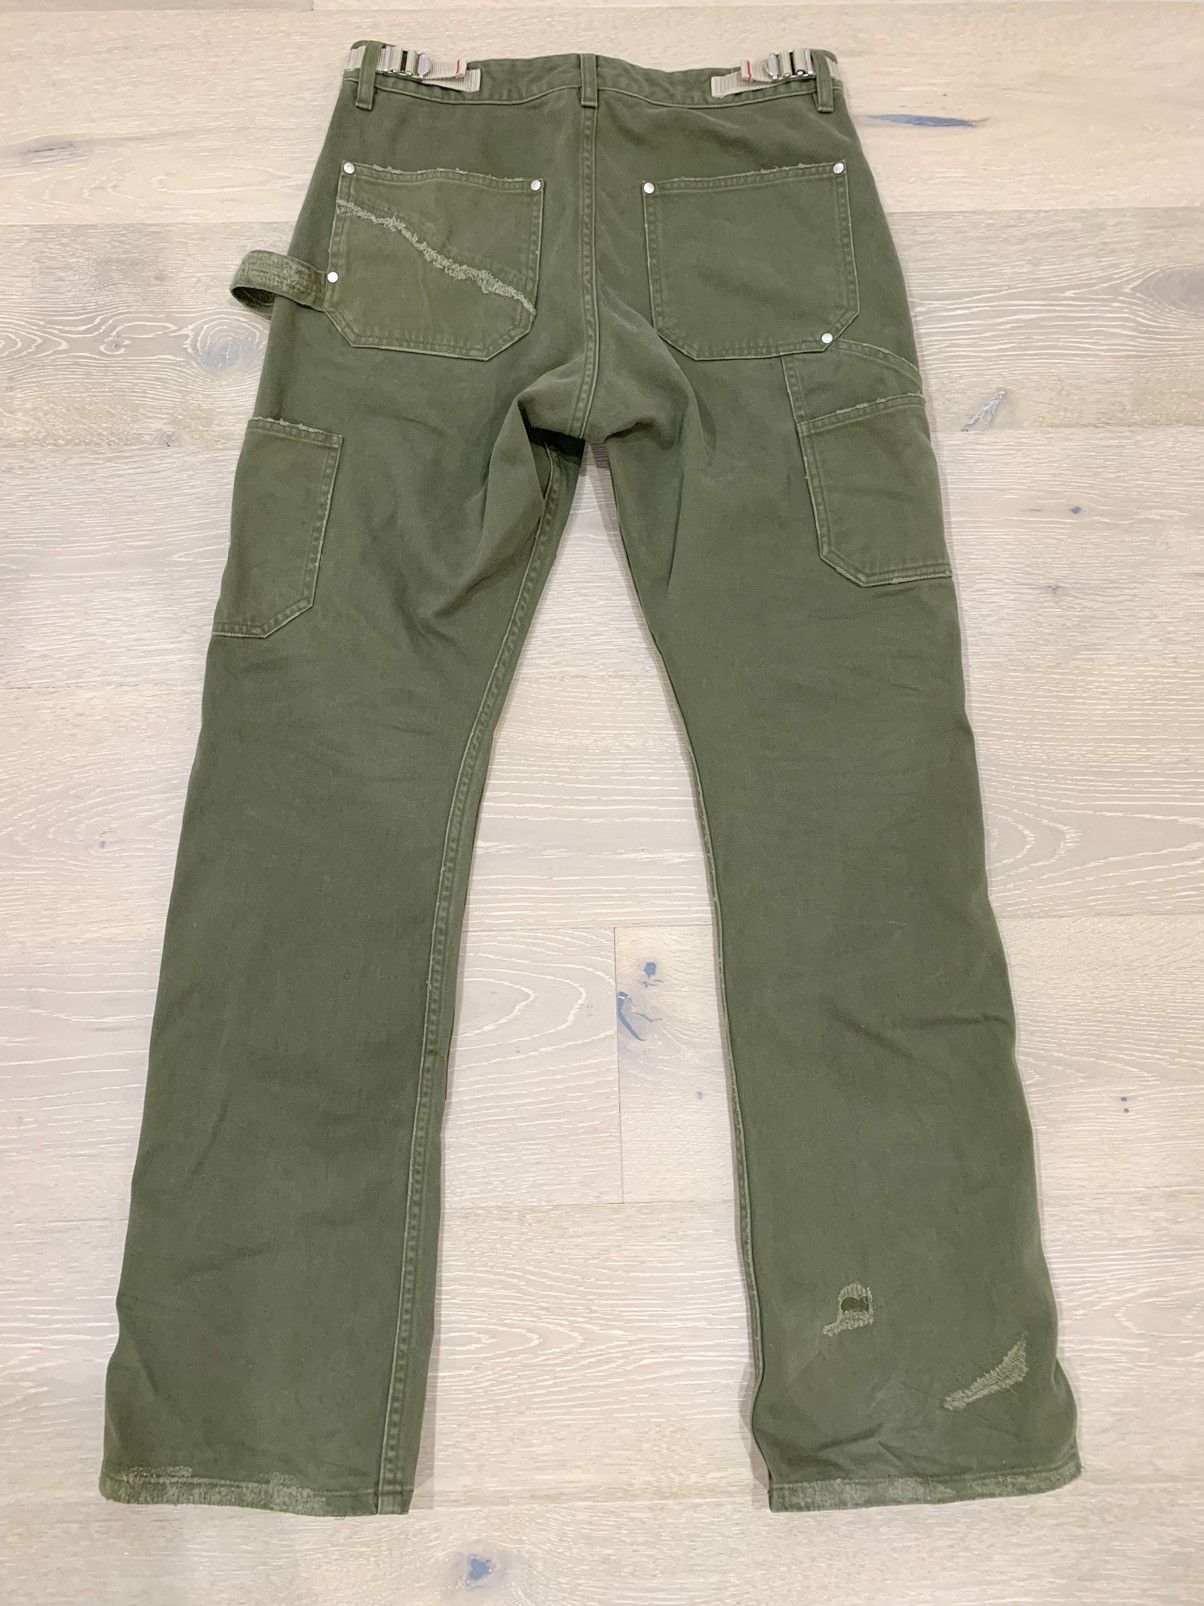 Vuja De Vuja Dé 004 Mori Trousers Double Knee Olive Pants Worker Size US 32 / EU 48 - 7 Thumbnail